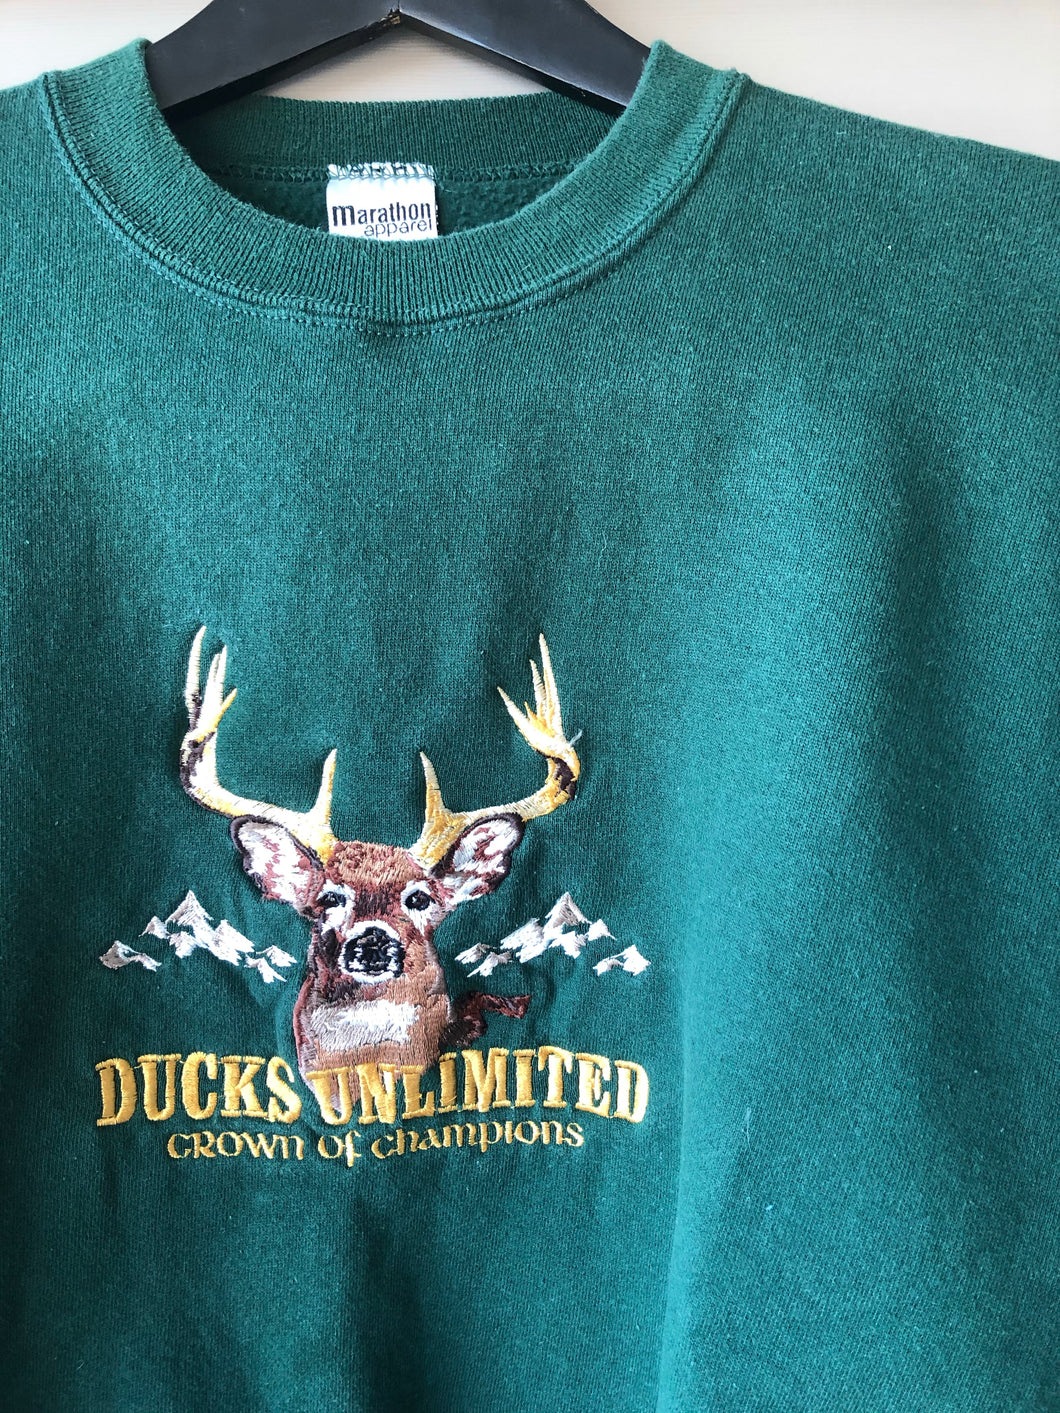 Ducks Unlimited Crown of Champions Sweatshirt (M)